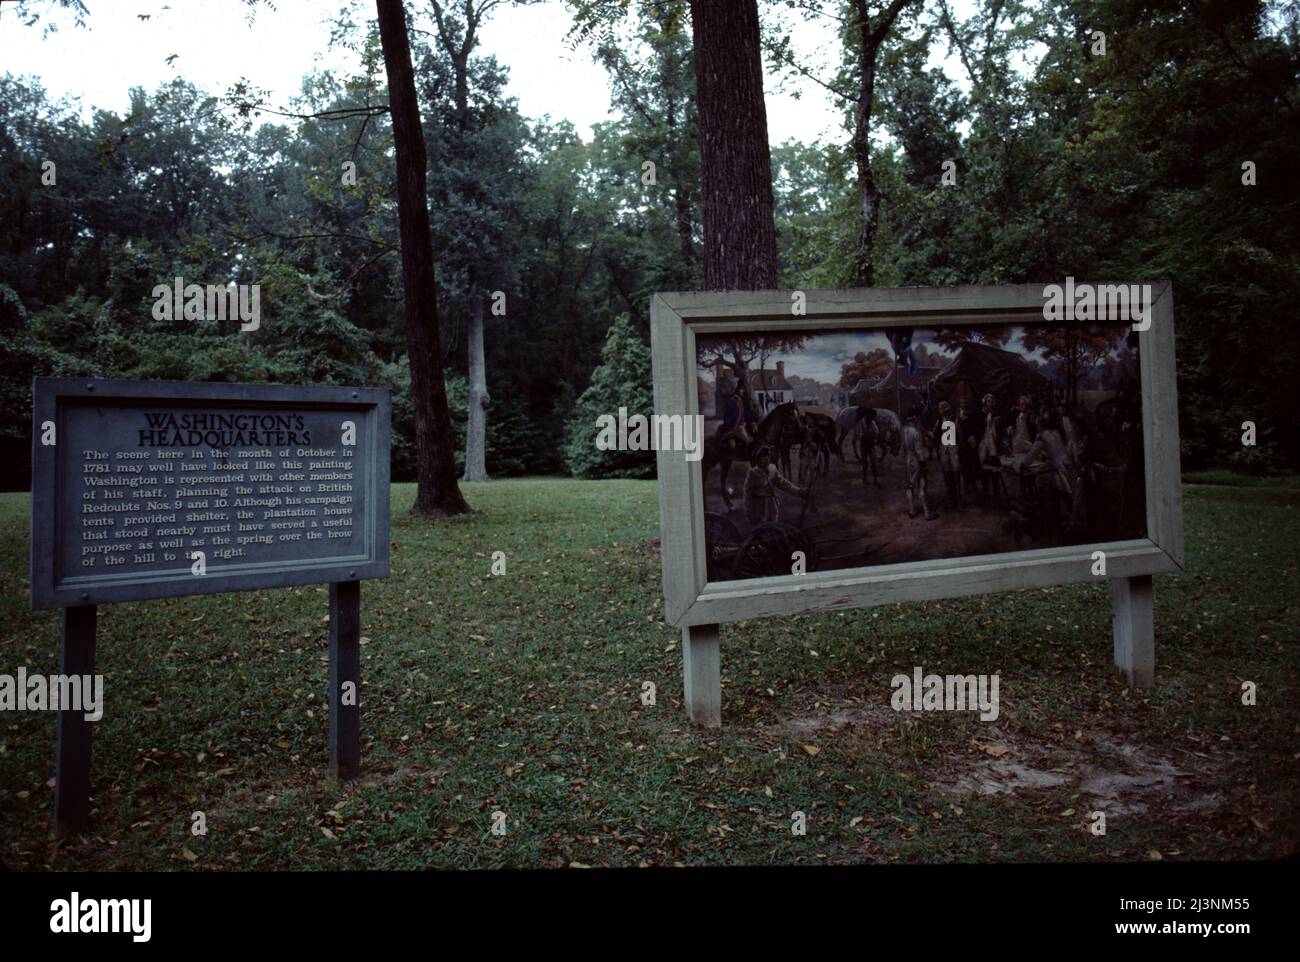 Williamsburg VA. U.S.A. 9/1987.  American Revolutionary War Battlefield site.  Gen. Washington's Headquarters. Stock Photo